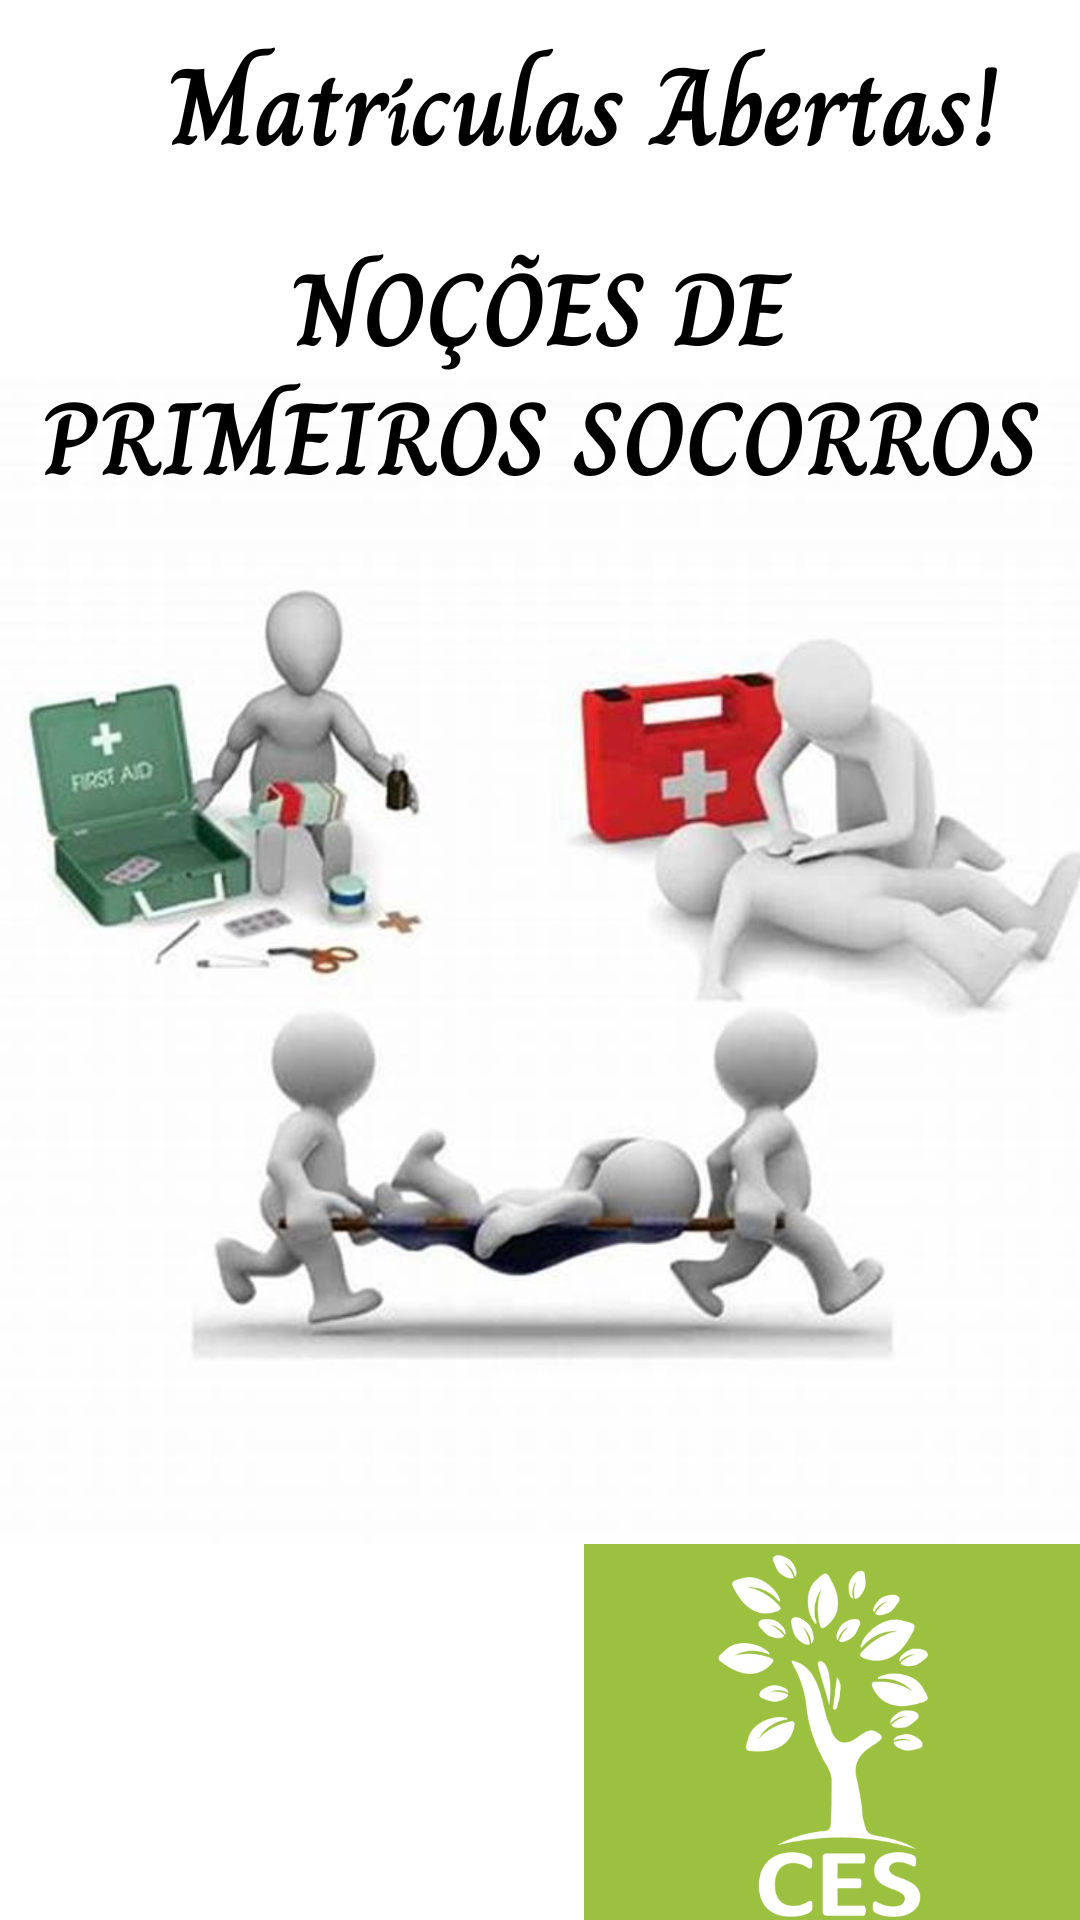 PRIMEIROS SOCORROS